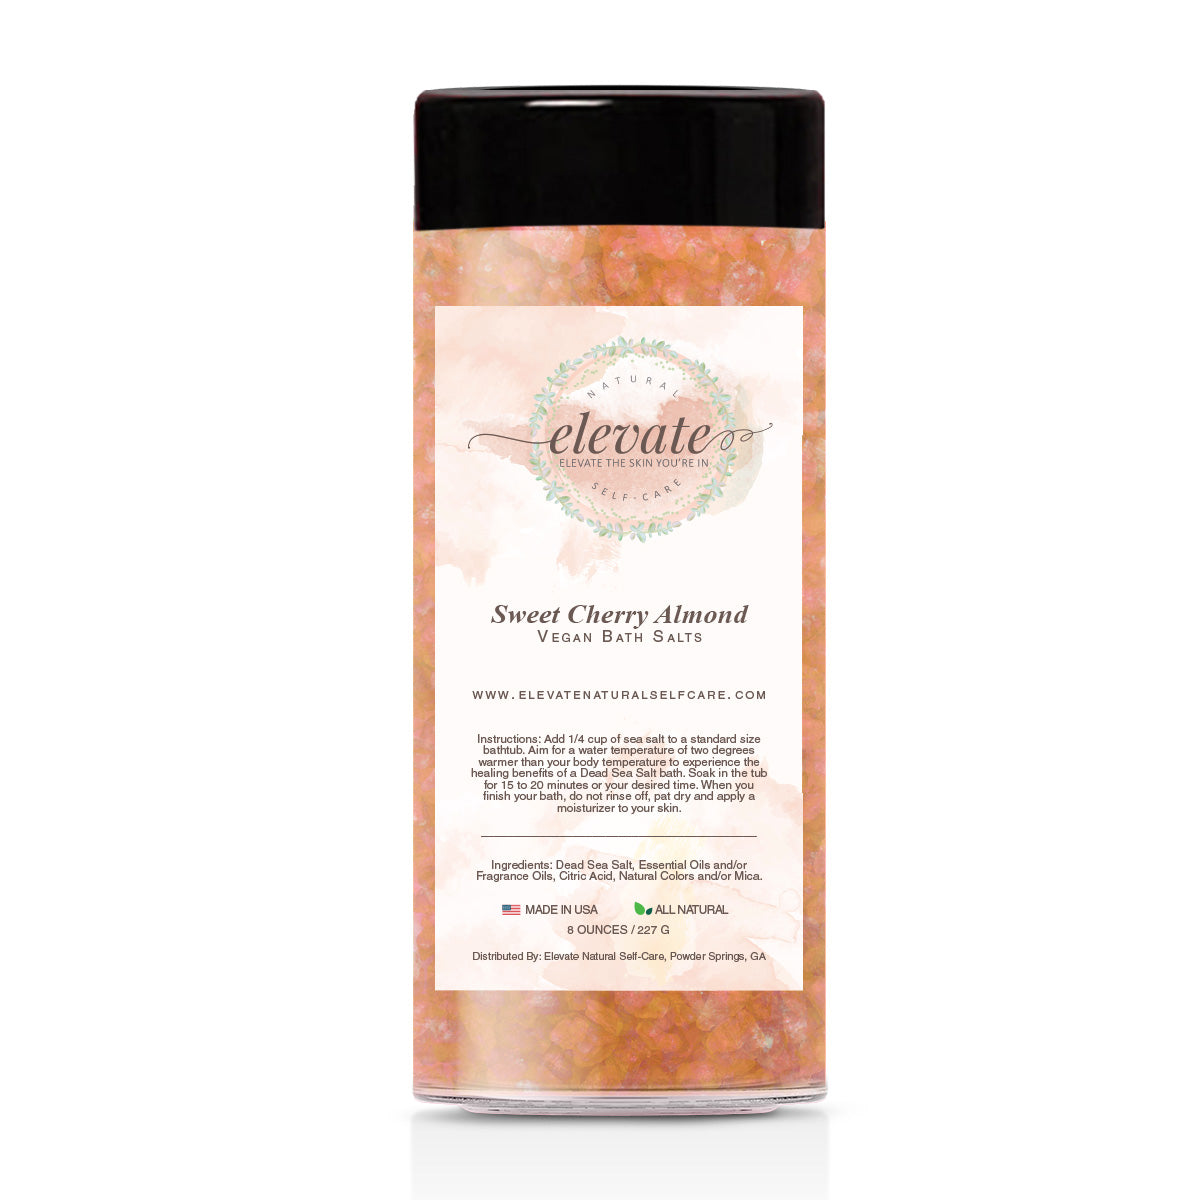 Sweet Cherry Almond Vegan Bath Salts